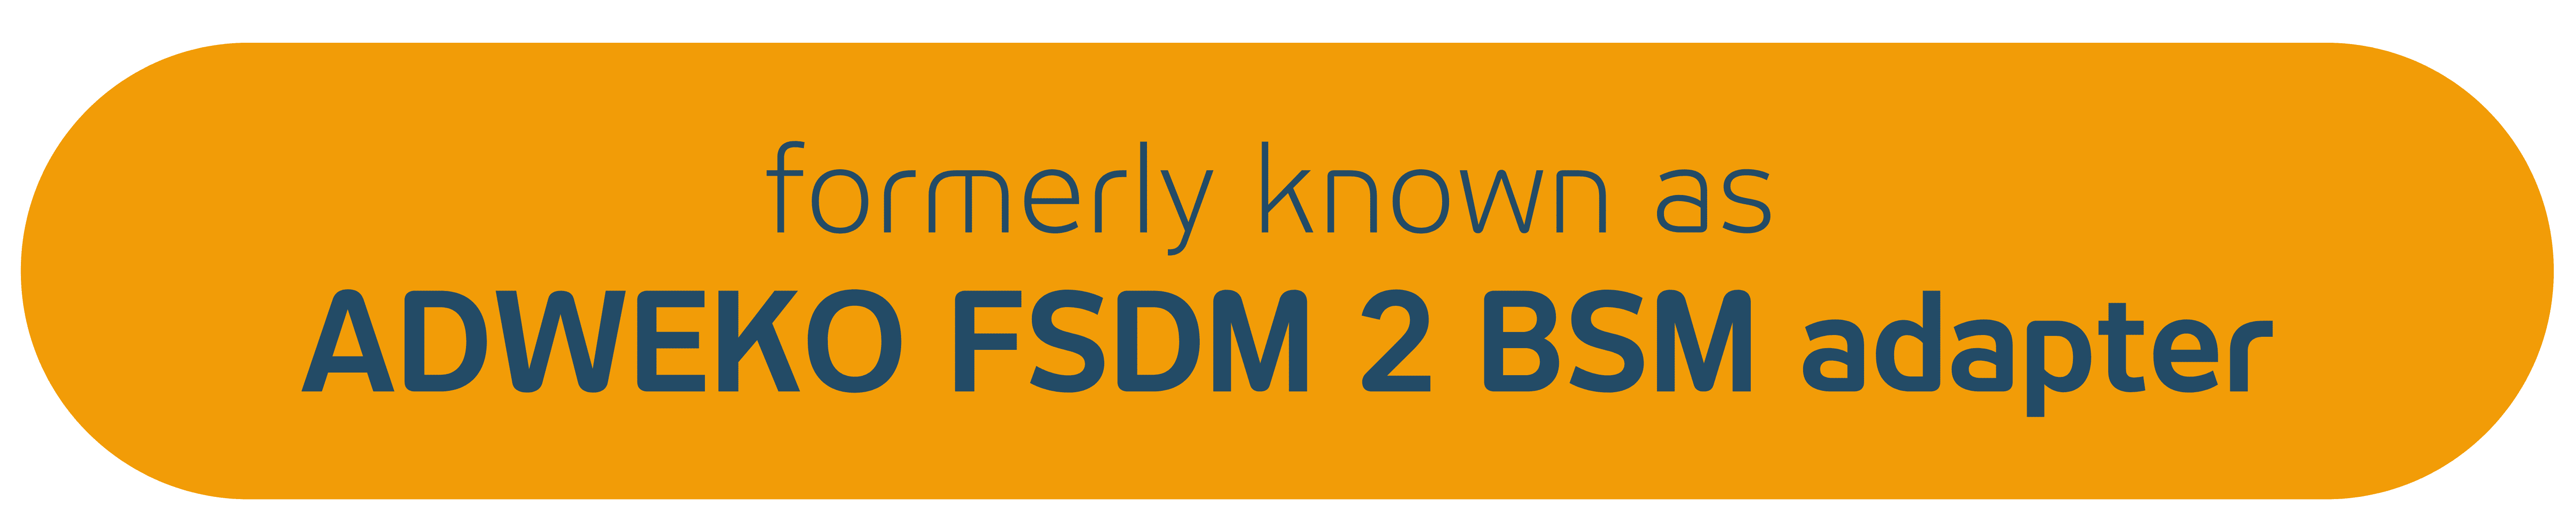 ADWEKO Integrate for FSDM & BSM